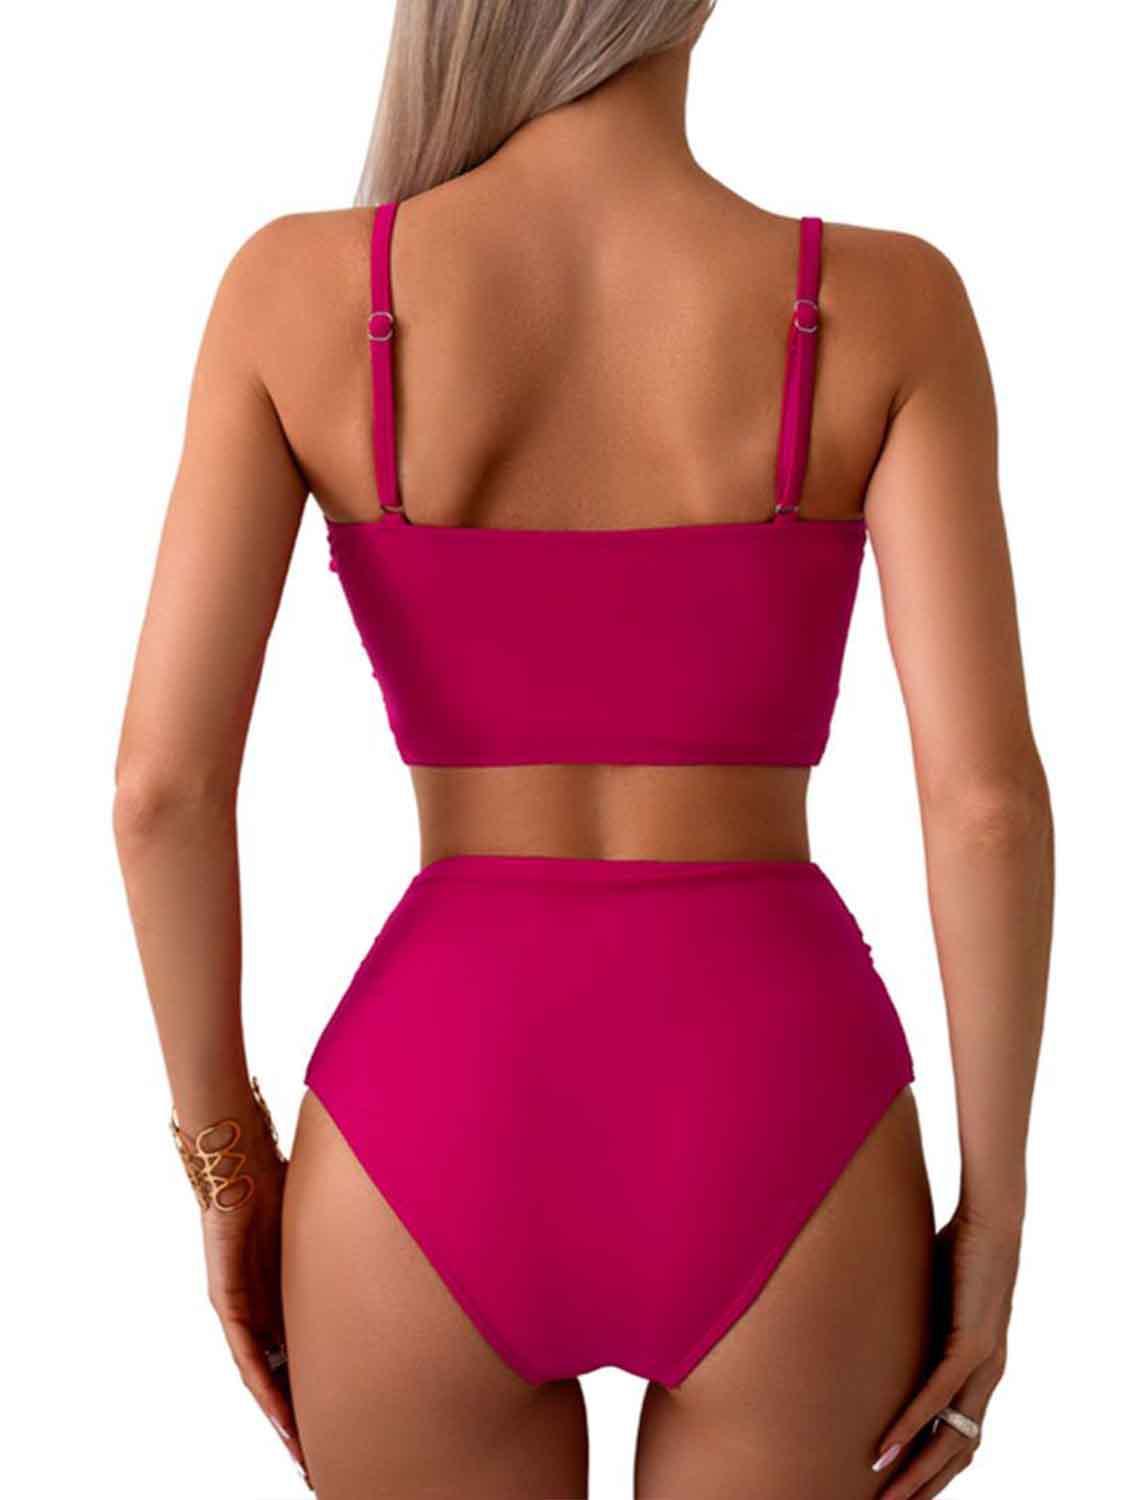 a woman in a pink bikini top and panties